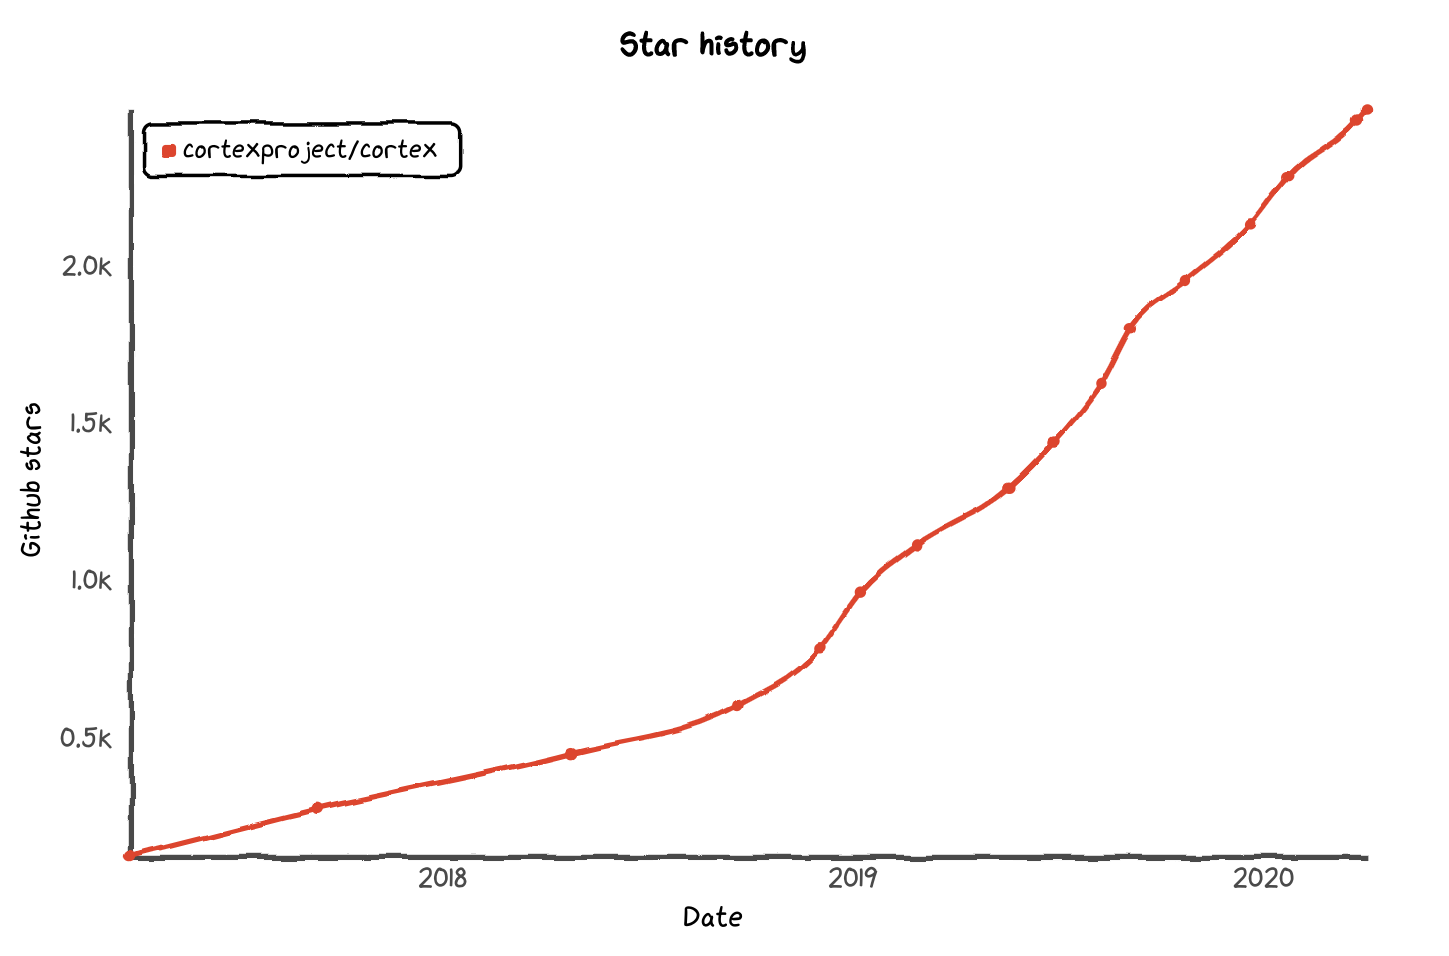 Cortex Star History